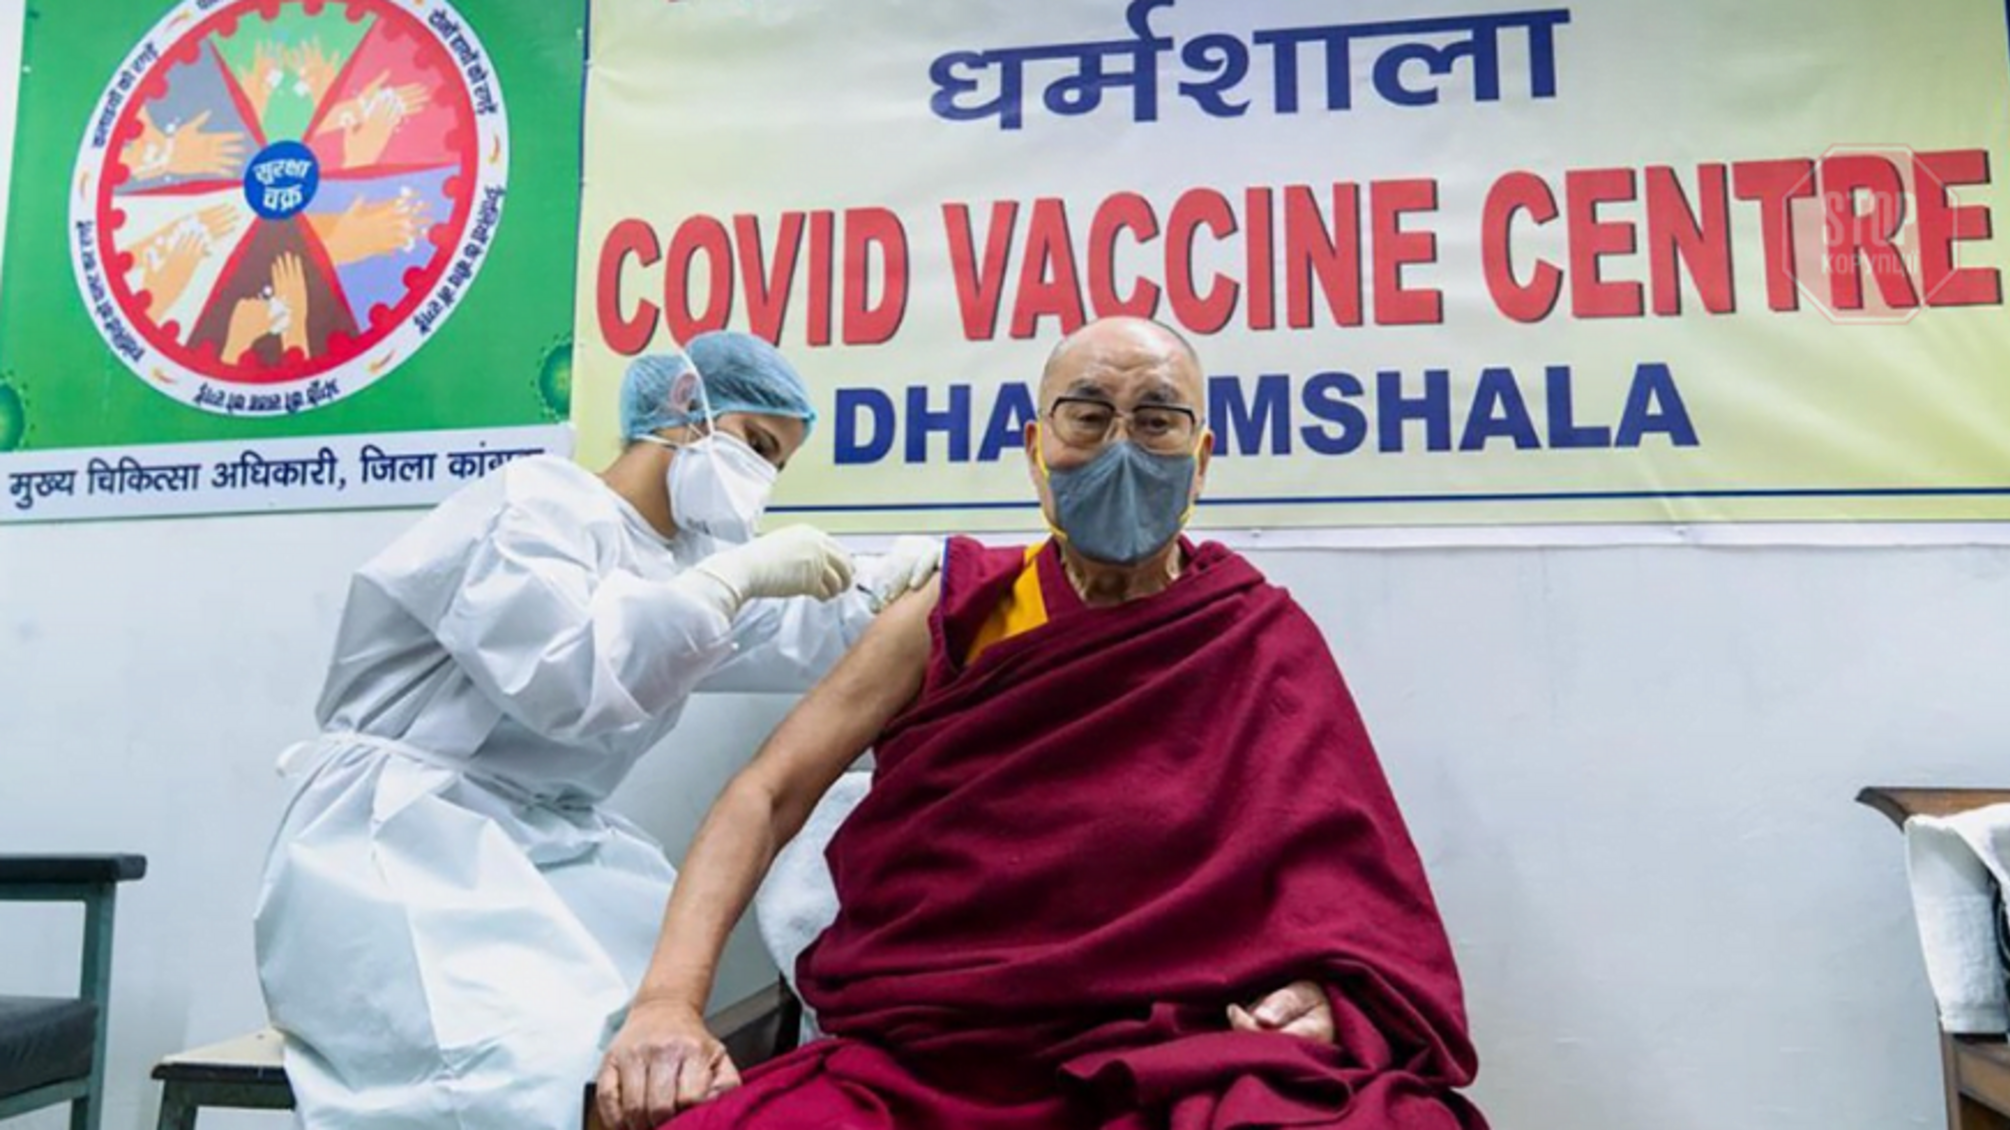 Далай-ламу вакцинували препаратом, який закупила Україна (відео)